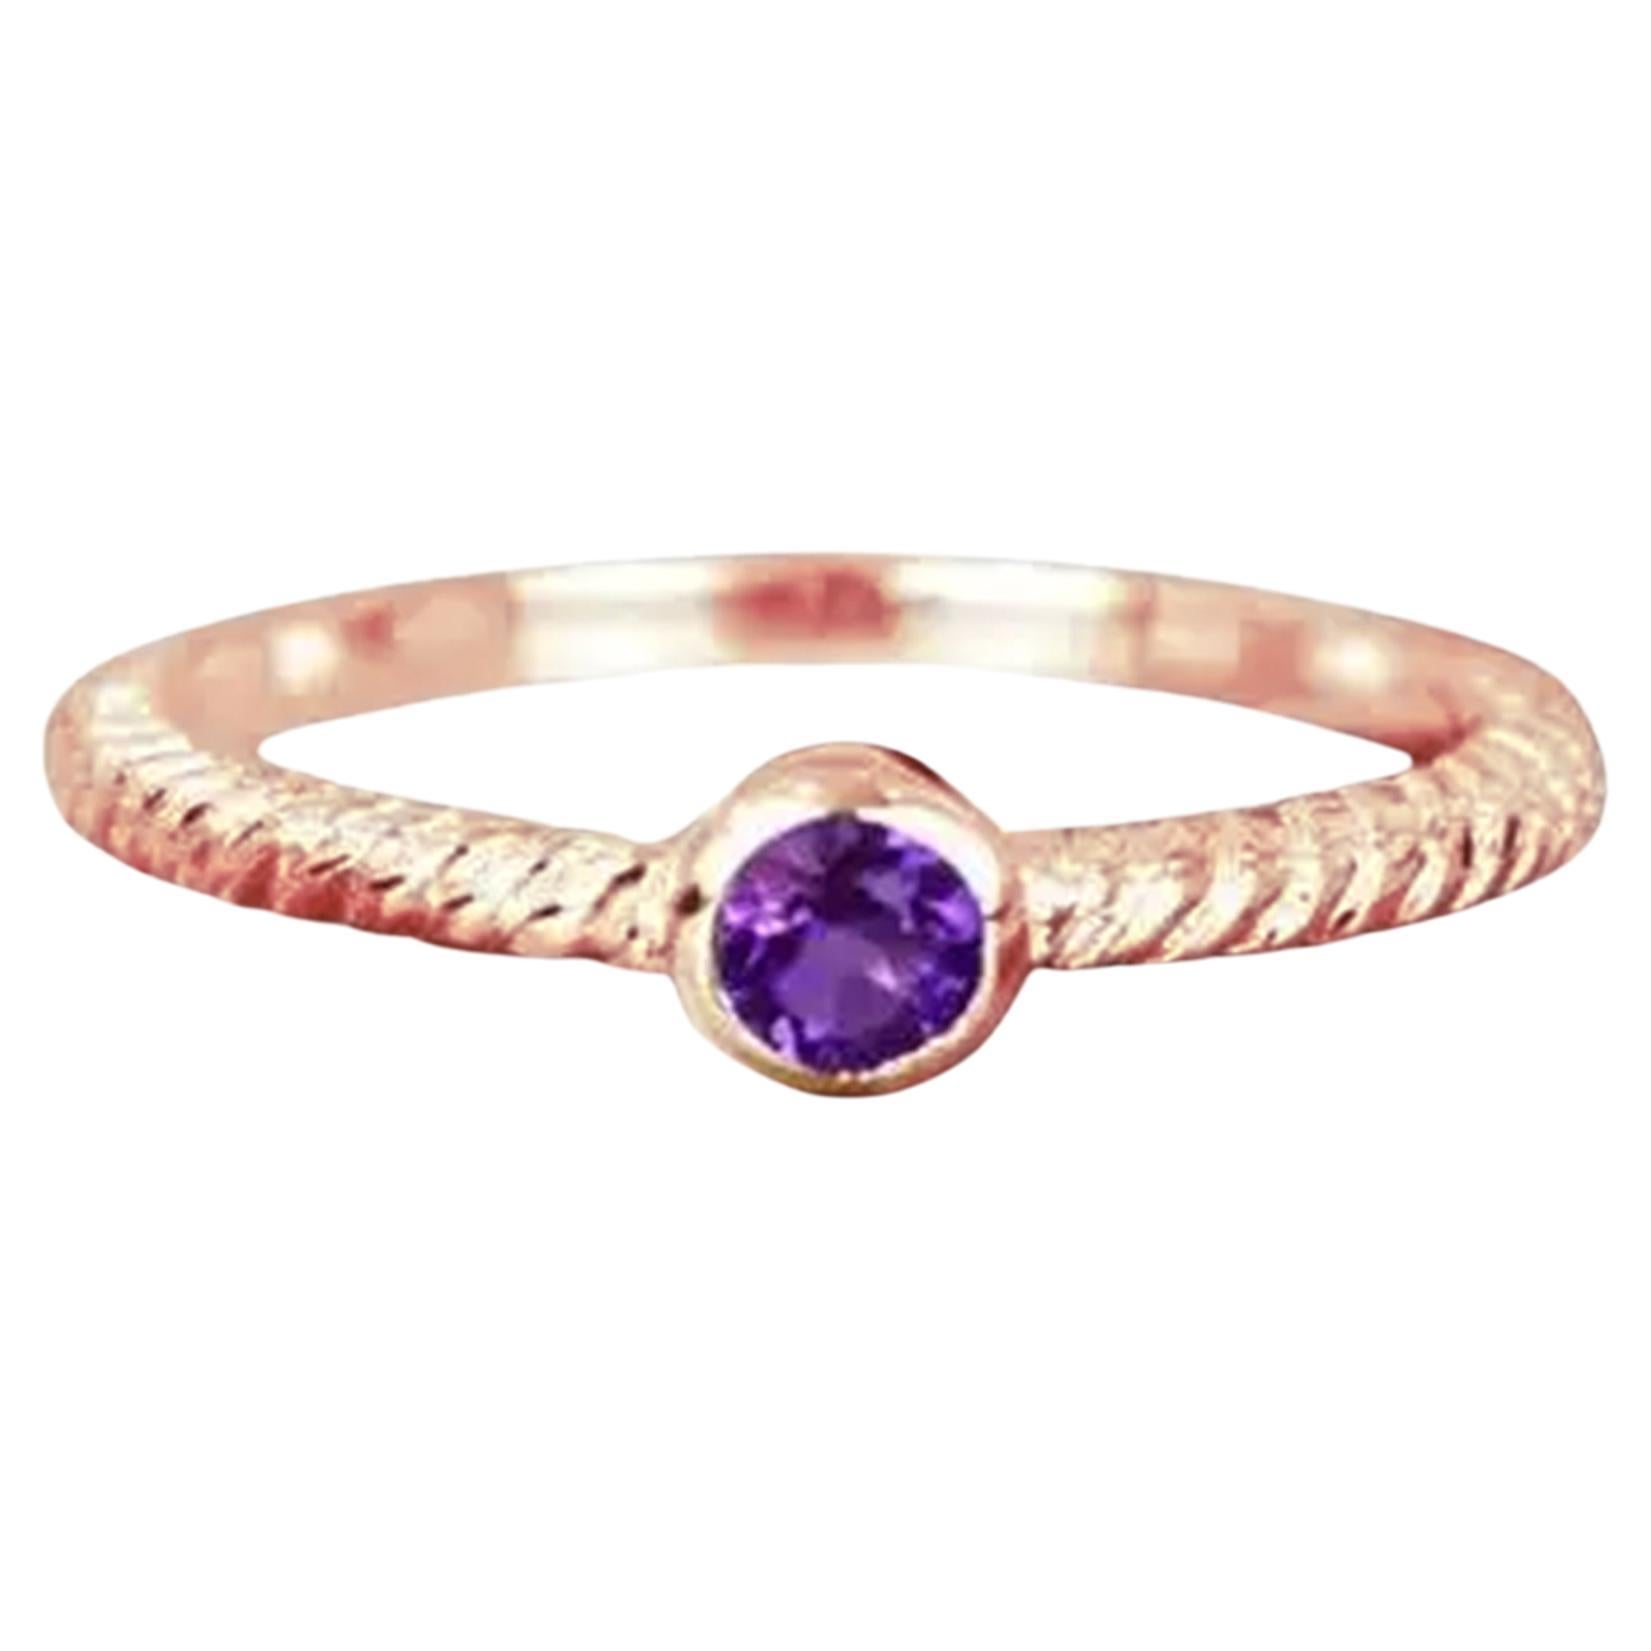 For Sale:  10k Gold Round Gemstone 3.5mm Round Gemstone Ring Birthstone Ring Stackable Ring